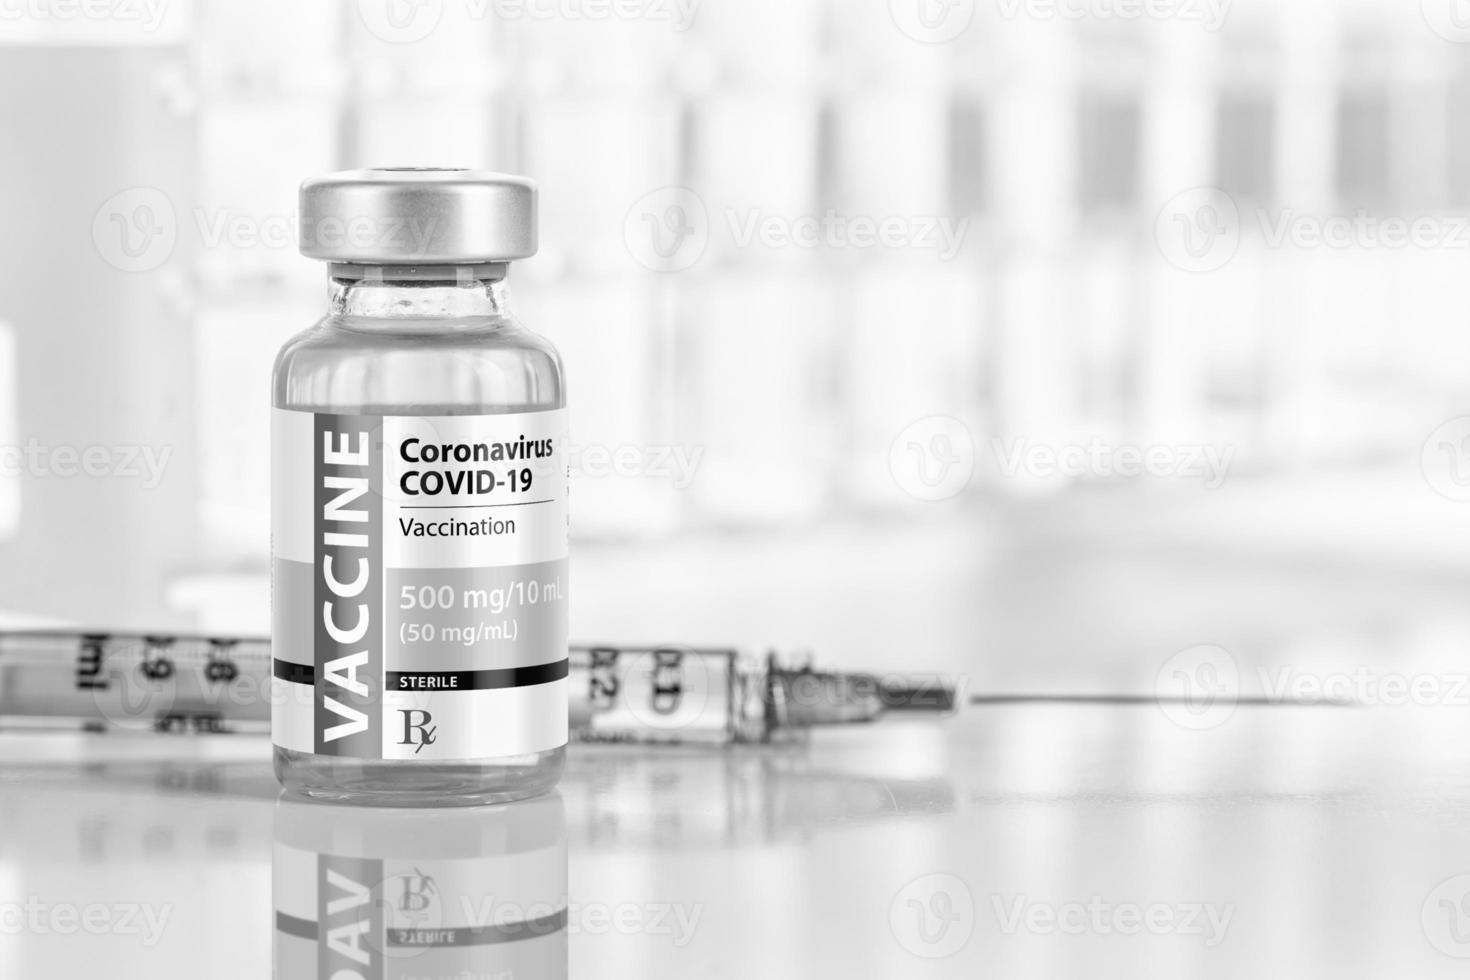 Coronavirus COVID-19 Vaccine Vial and Syringe On Reflective Surface Near Test Tubes photo